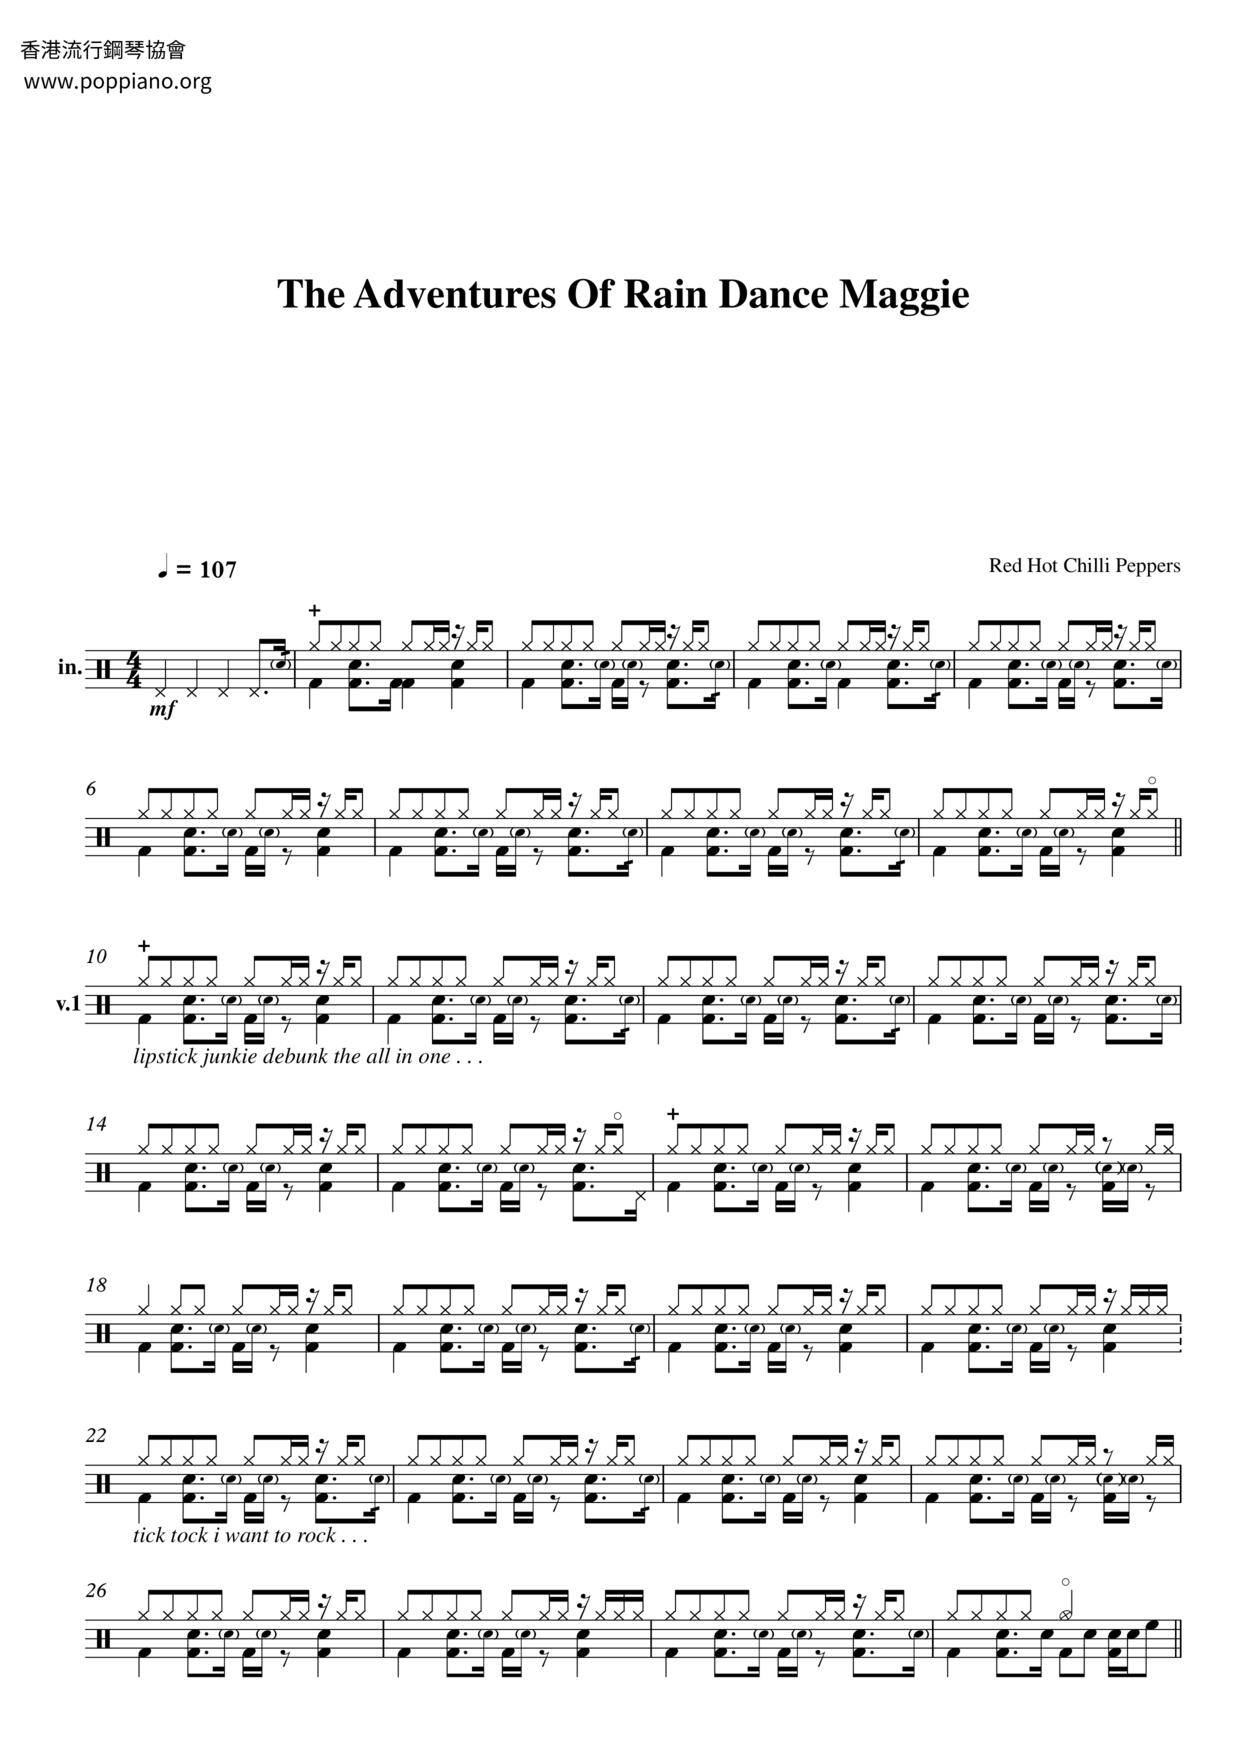 The Adventures Of Rain Dance Maggie Score